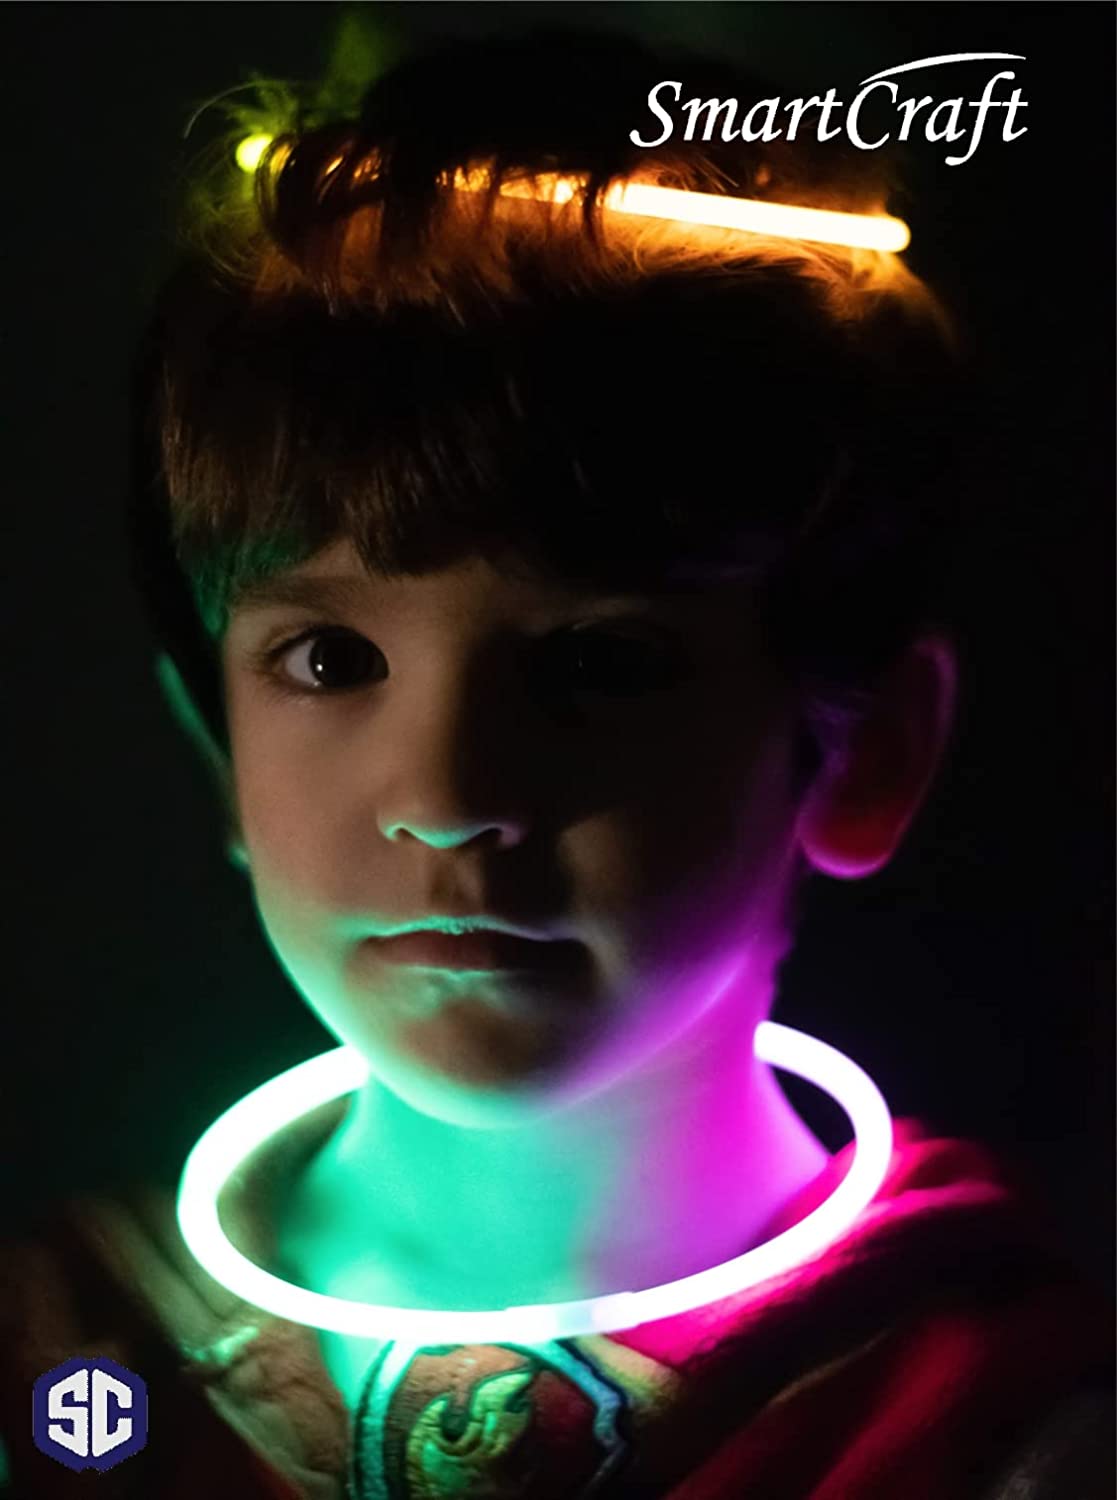 Glow Sticks and LED Light Sticks